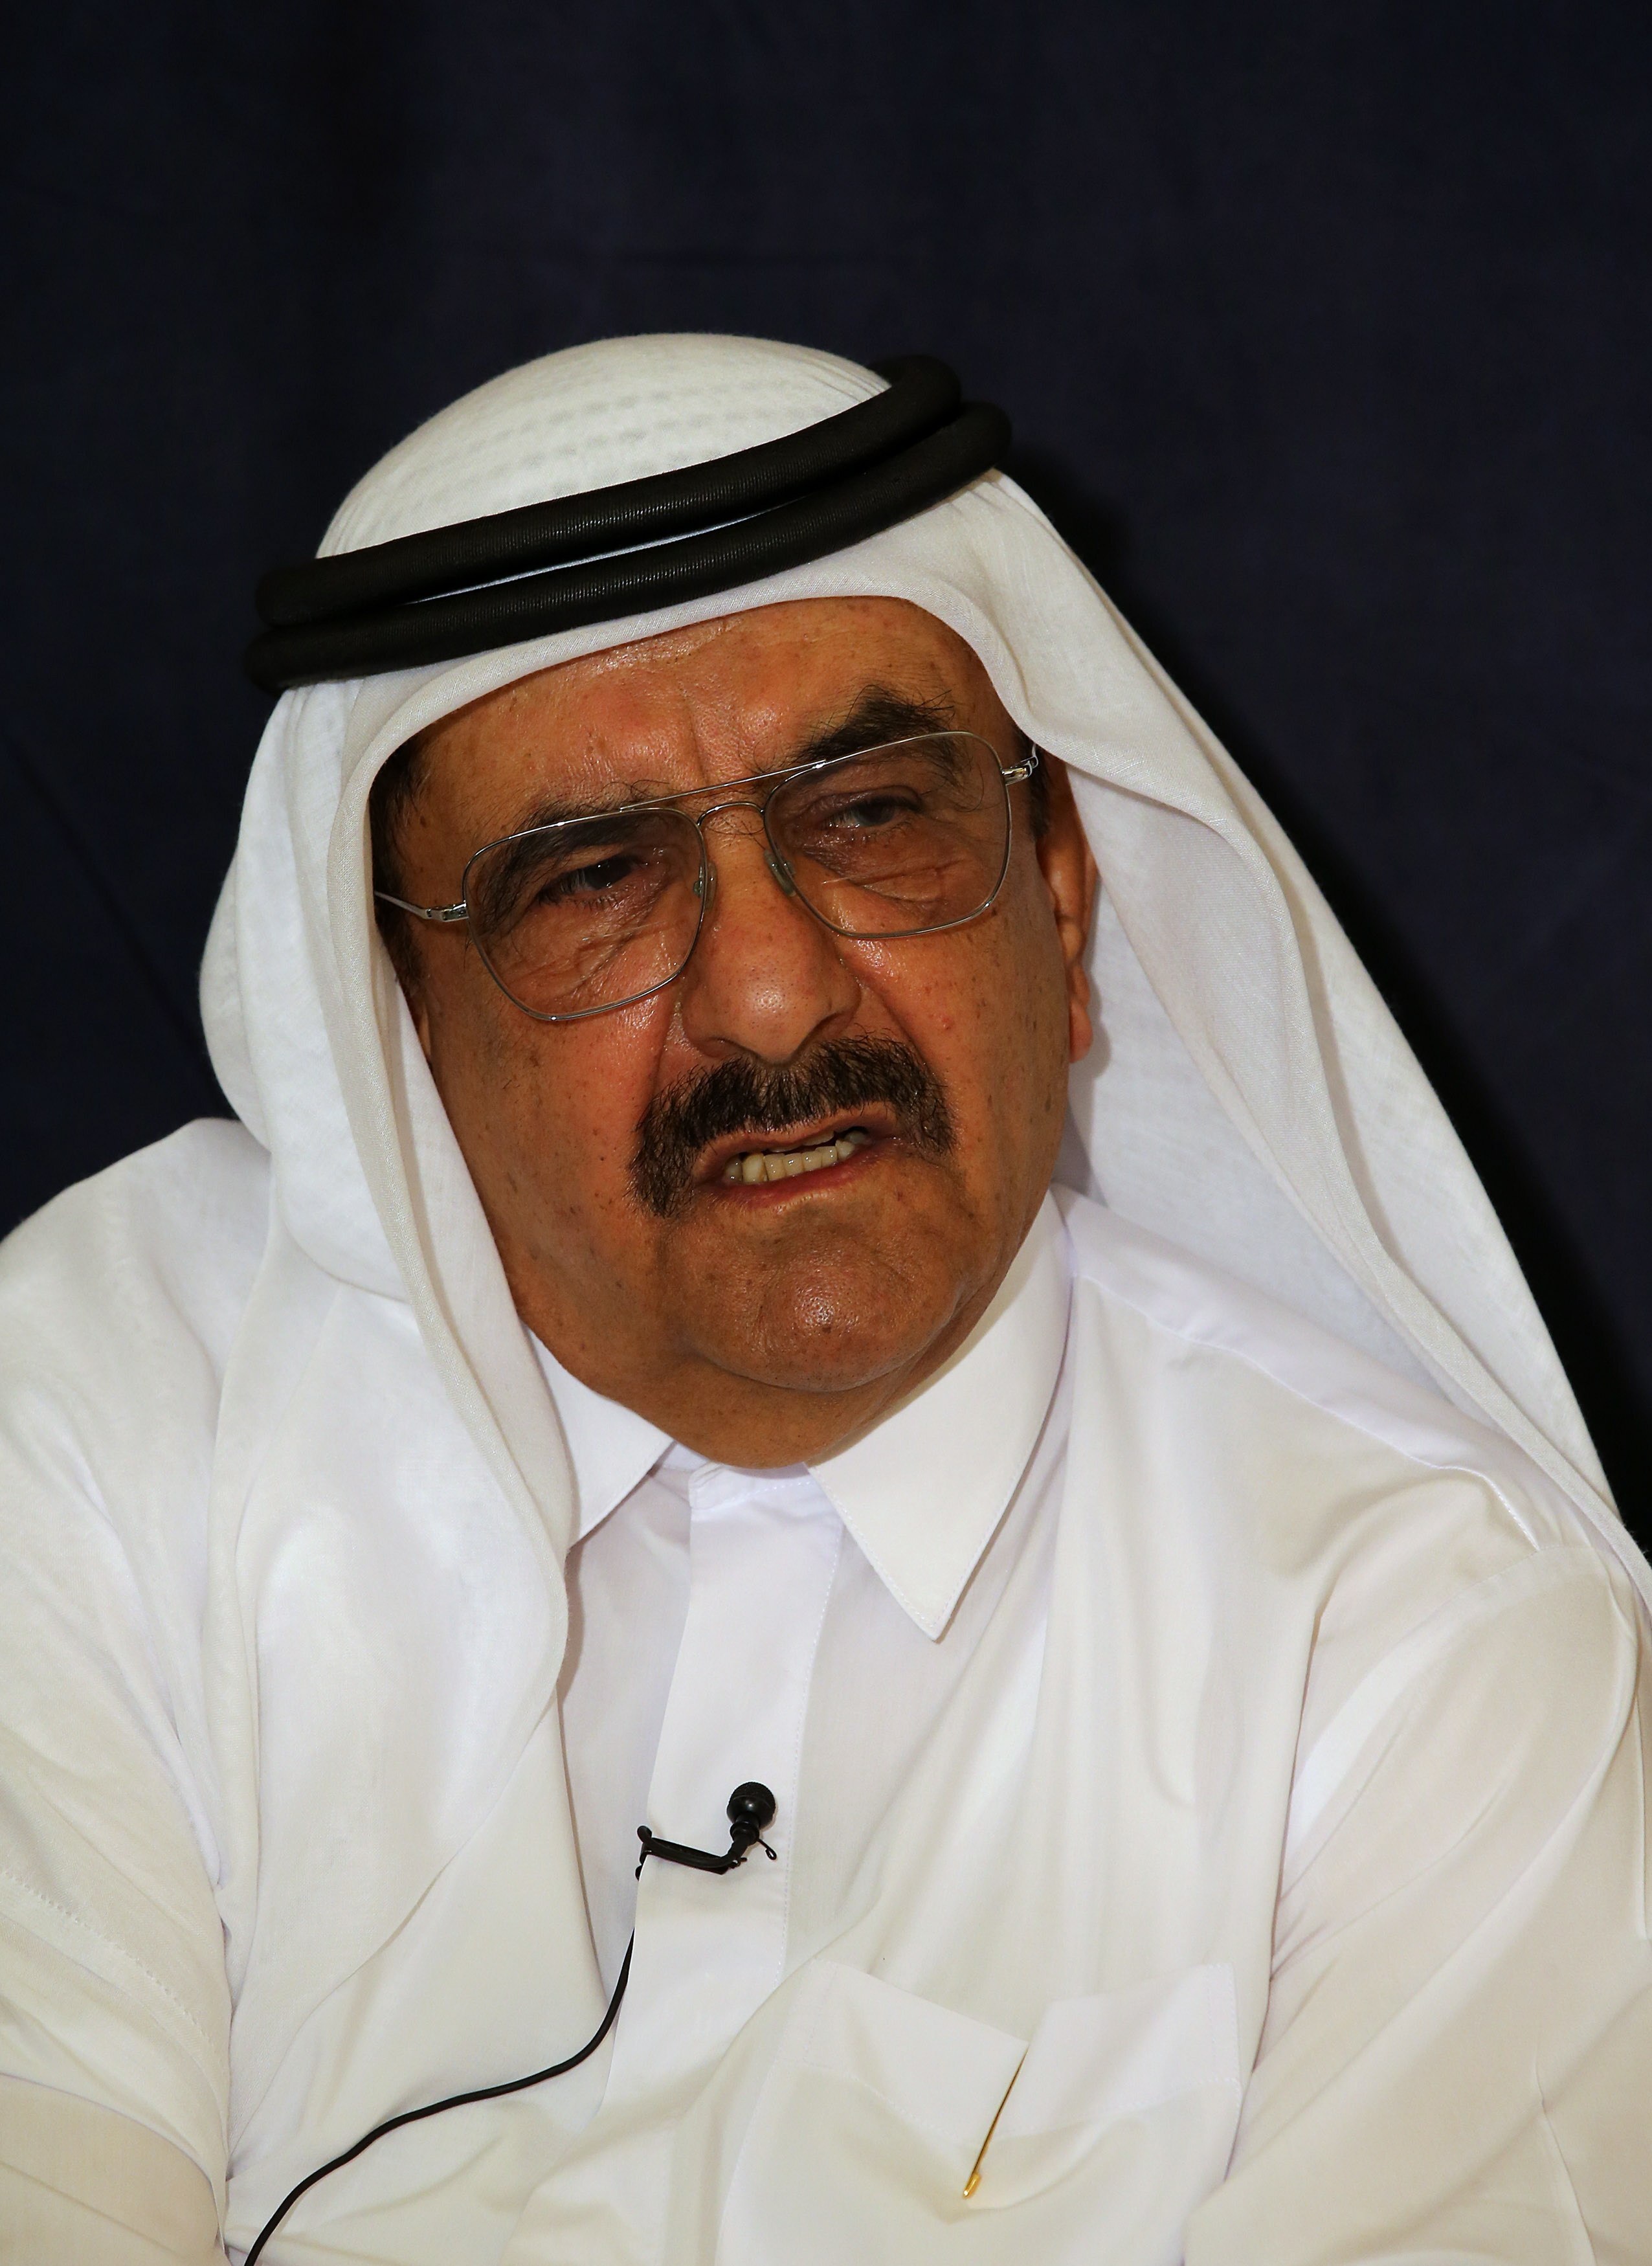 Sheikh Hamdan Bin Rashid Al Maktoum, Deputy Ruler of Dubai, died on Wednesday at age 75. Photo: EPA-EFE